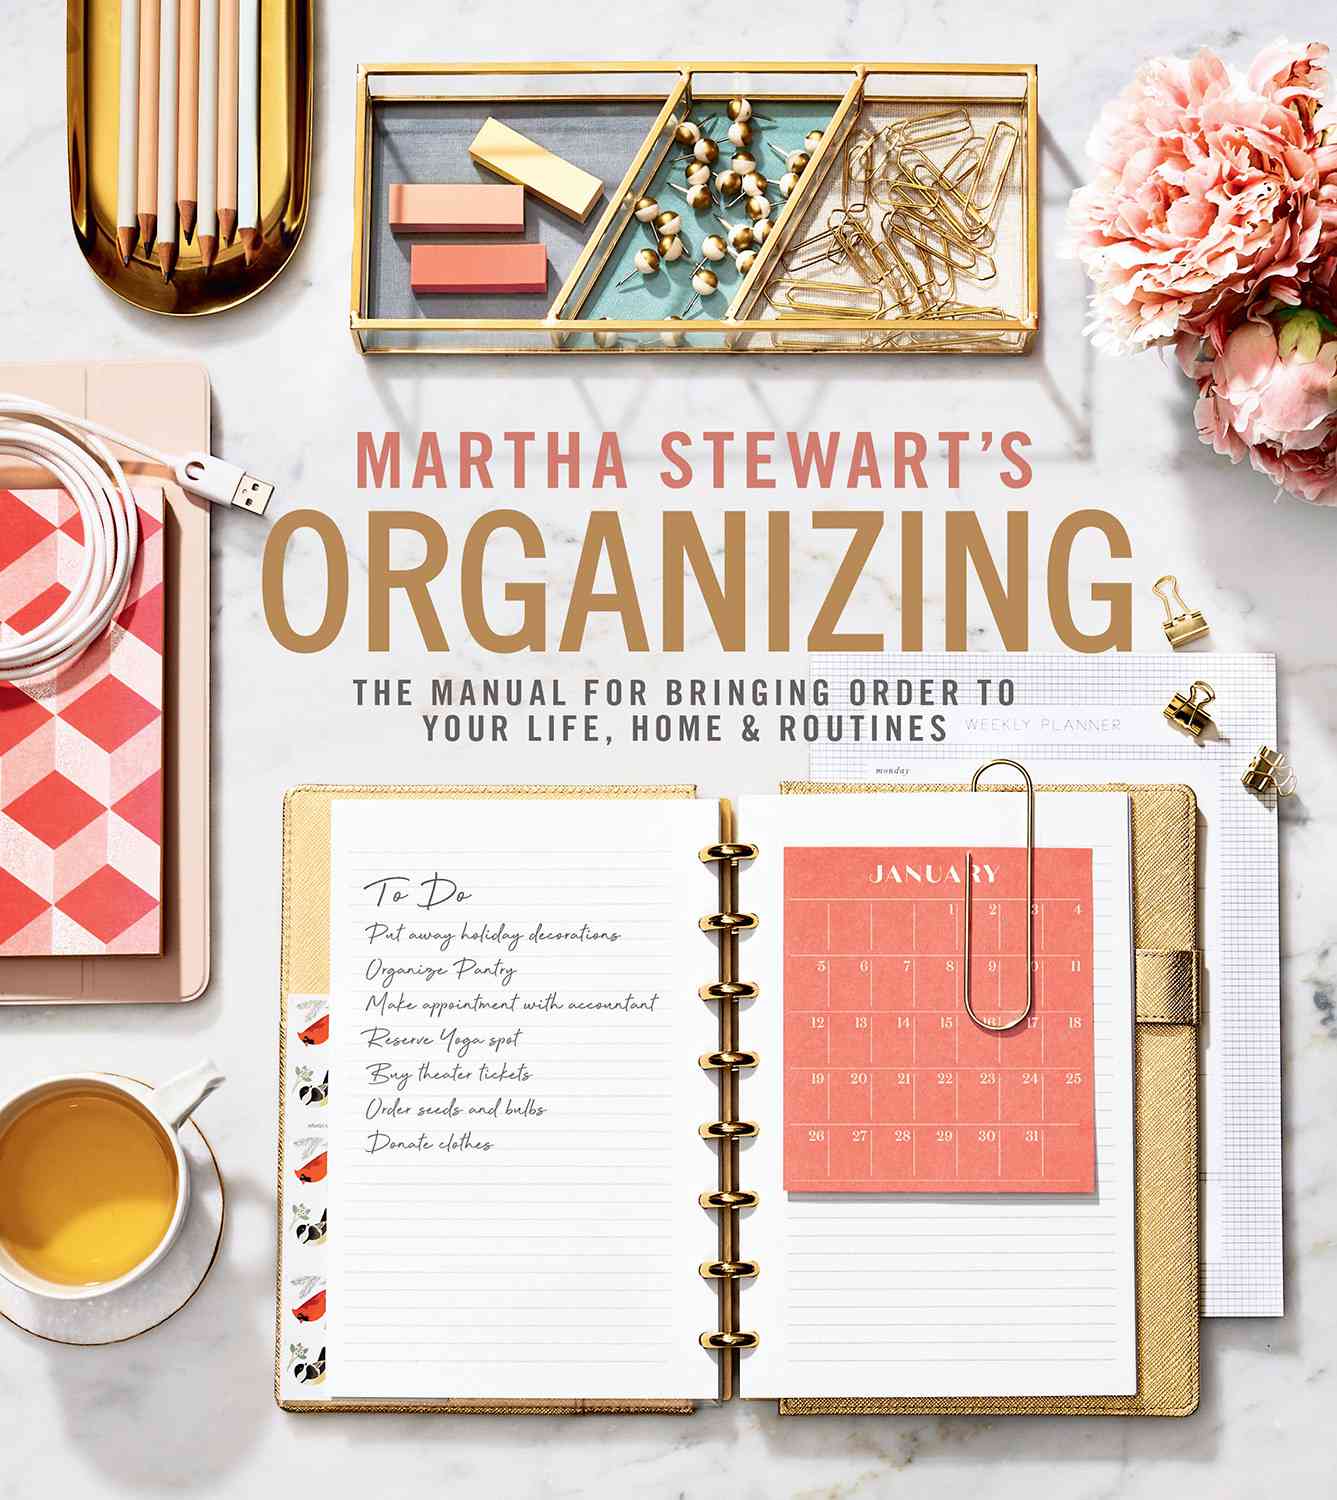 Martha Stewart's Organizing book